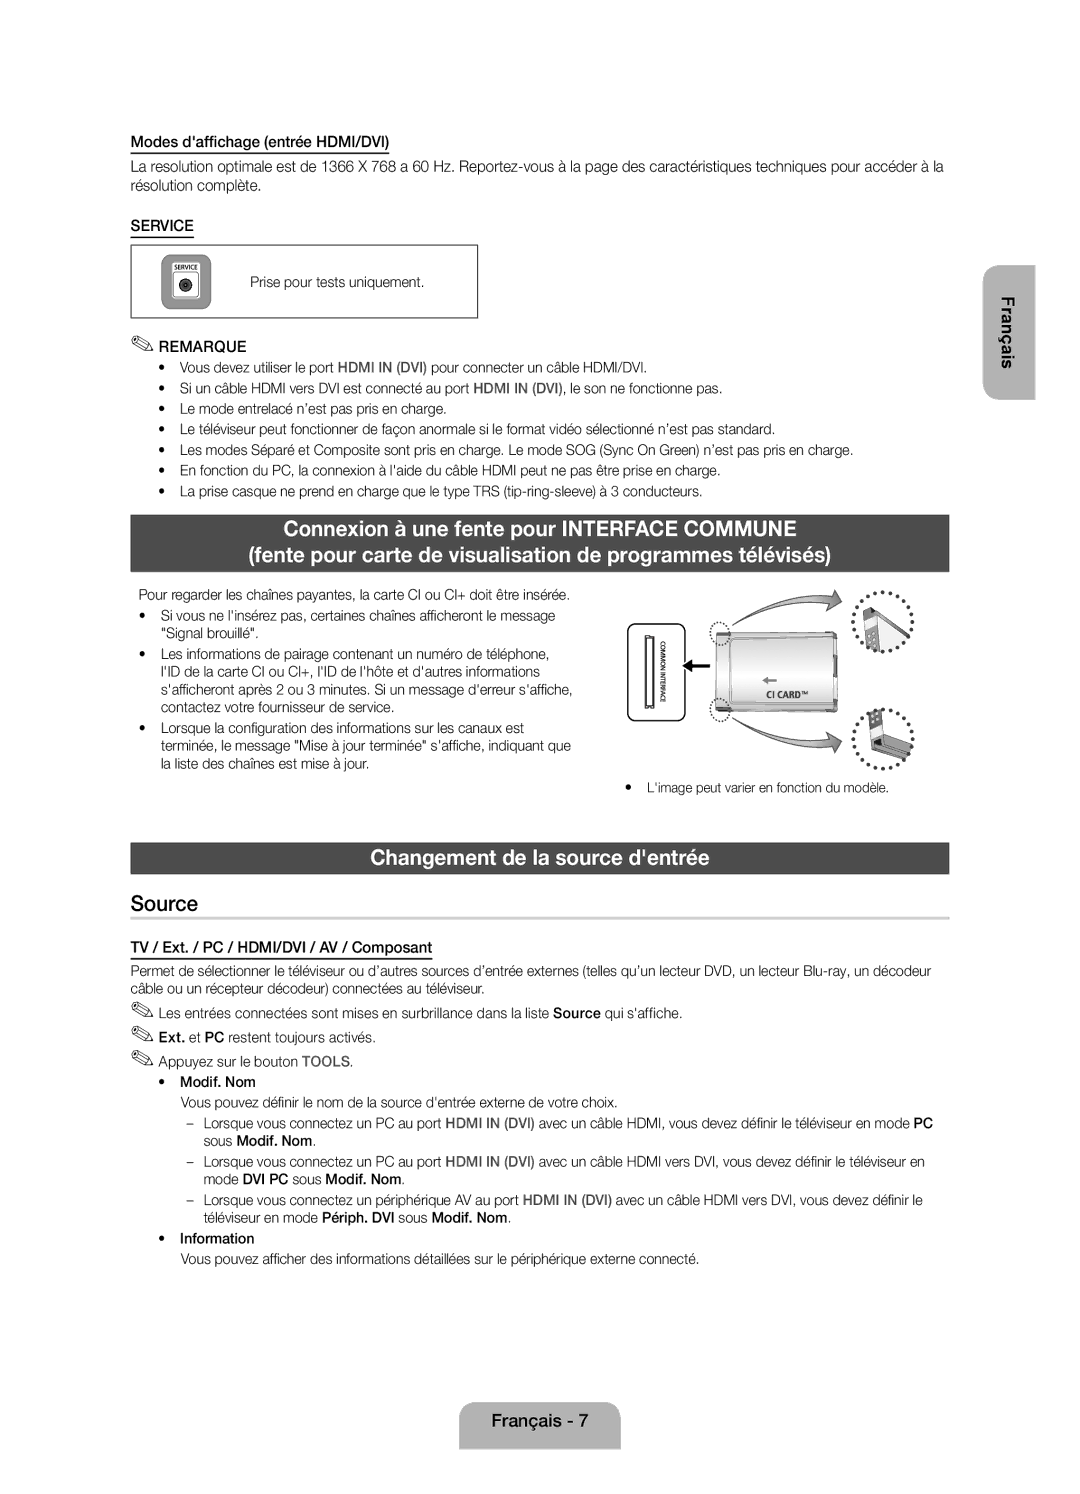 Samsung UE19ES4000WXZF manual Changement de la source dentrée, TV / Ext. / PC / HDMI/DVI / AV / Composant 